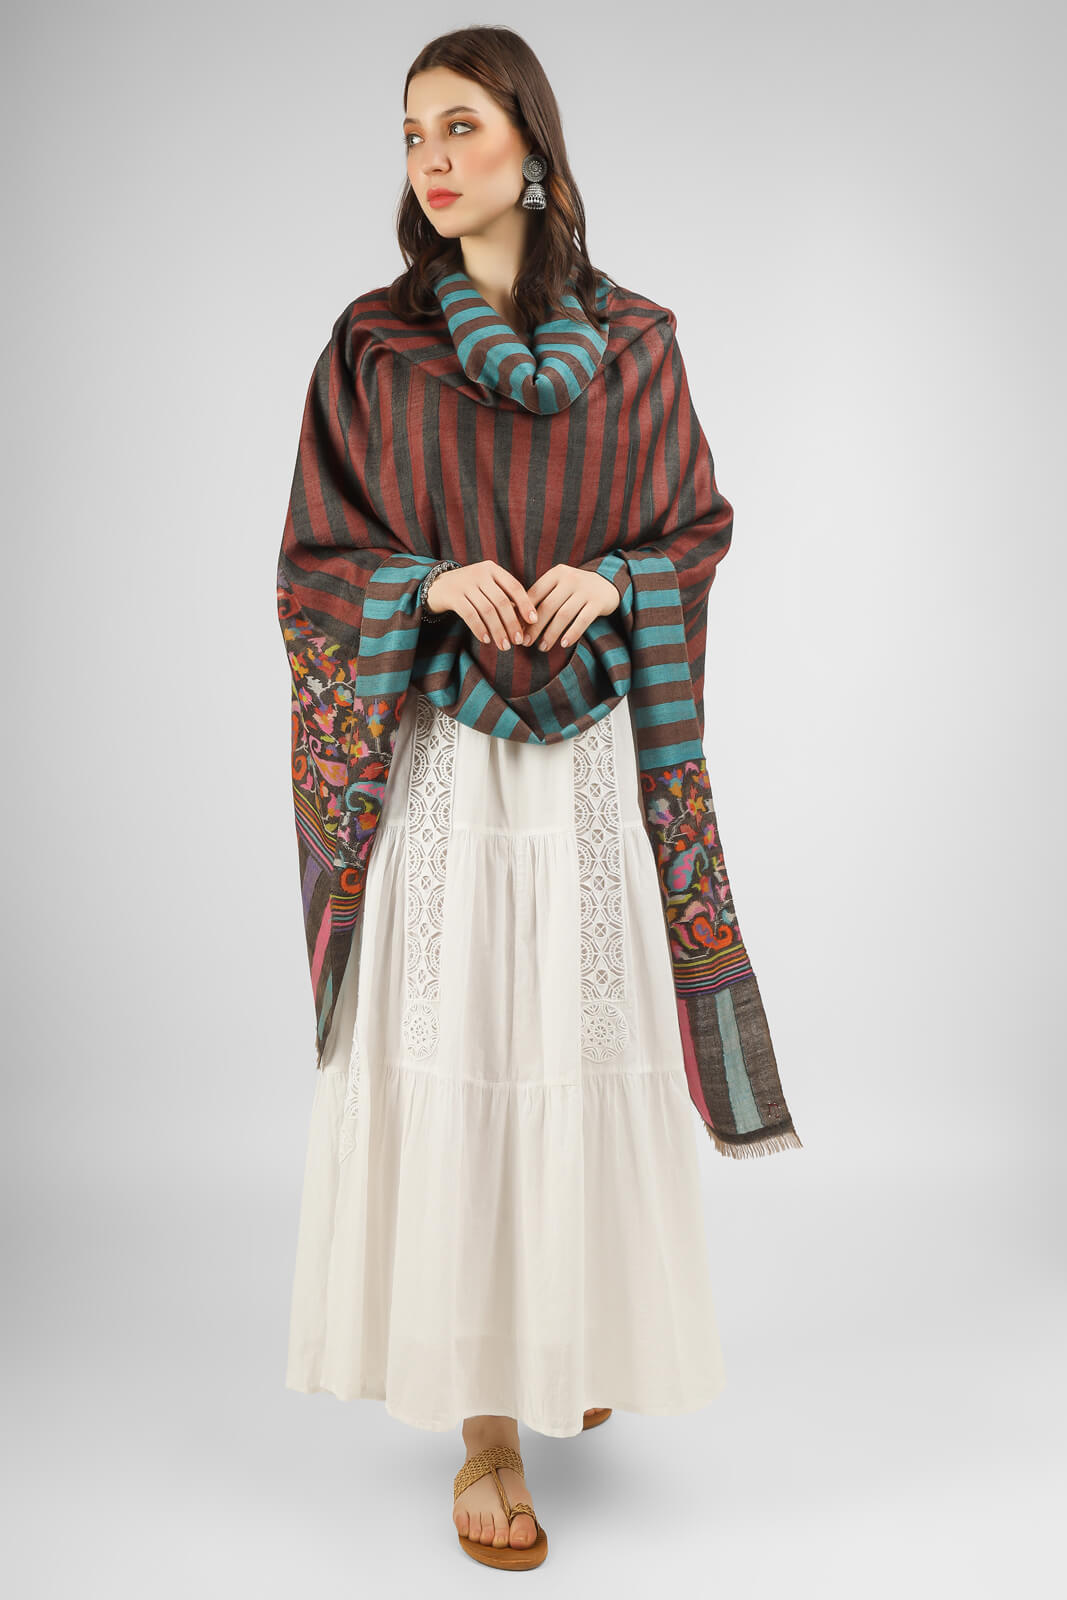 "KANI SHAWL - Indulge in the Luxury of a Handmade Kani Pashmina Shawl from Kashmir. Stay Warm and Stylish with Beautiful Floral and Paisley Designs Crafted by Artisans, Available online - QATAR - UNITED ARAB EMIRATES - KUWAIT - BRUNEI - SAUDI ARABIA - BAHRAIN - MALAYSIA - OMAN - TURKEY - JORDAN."